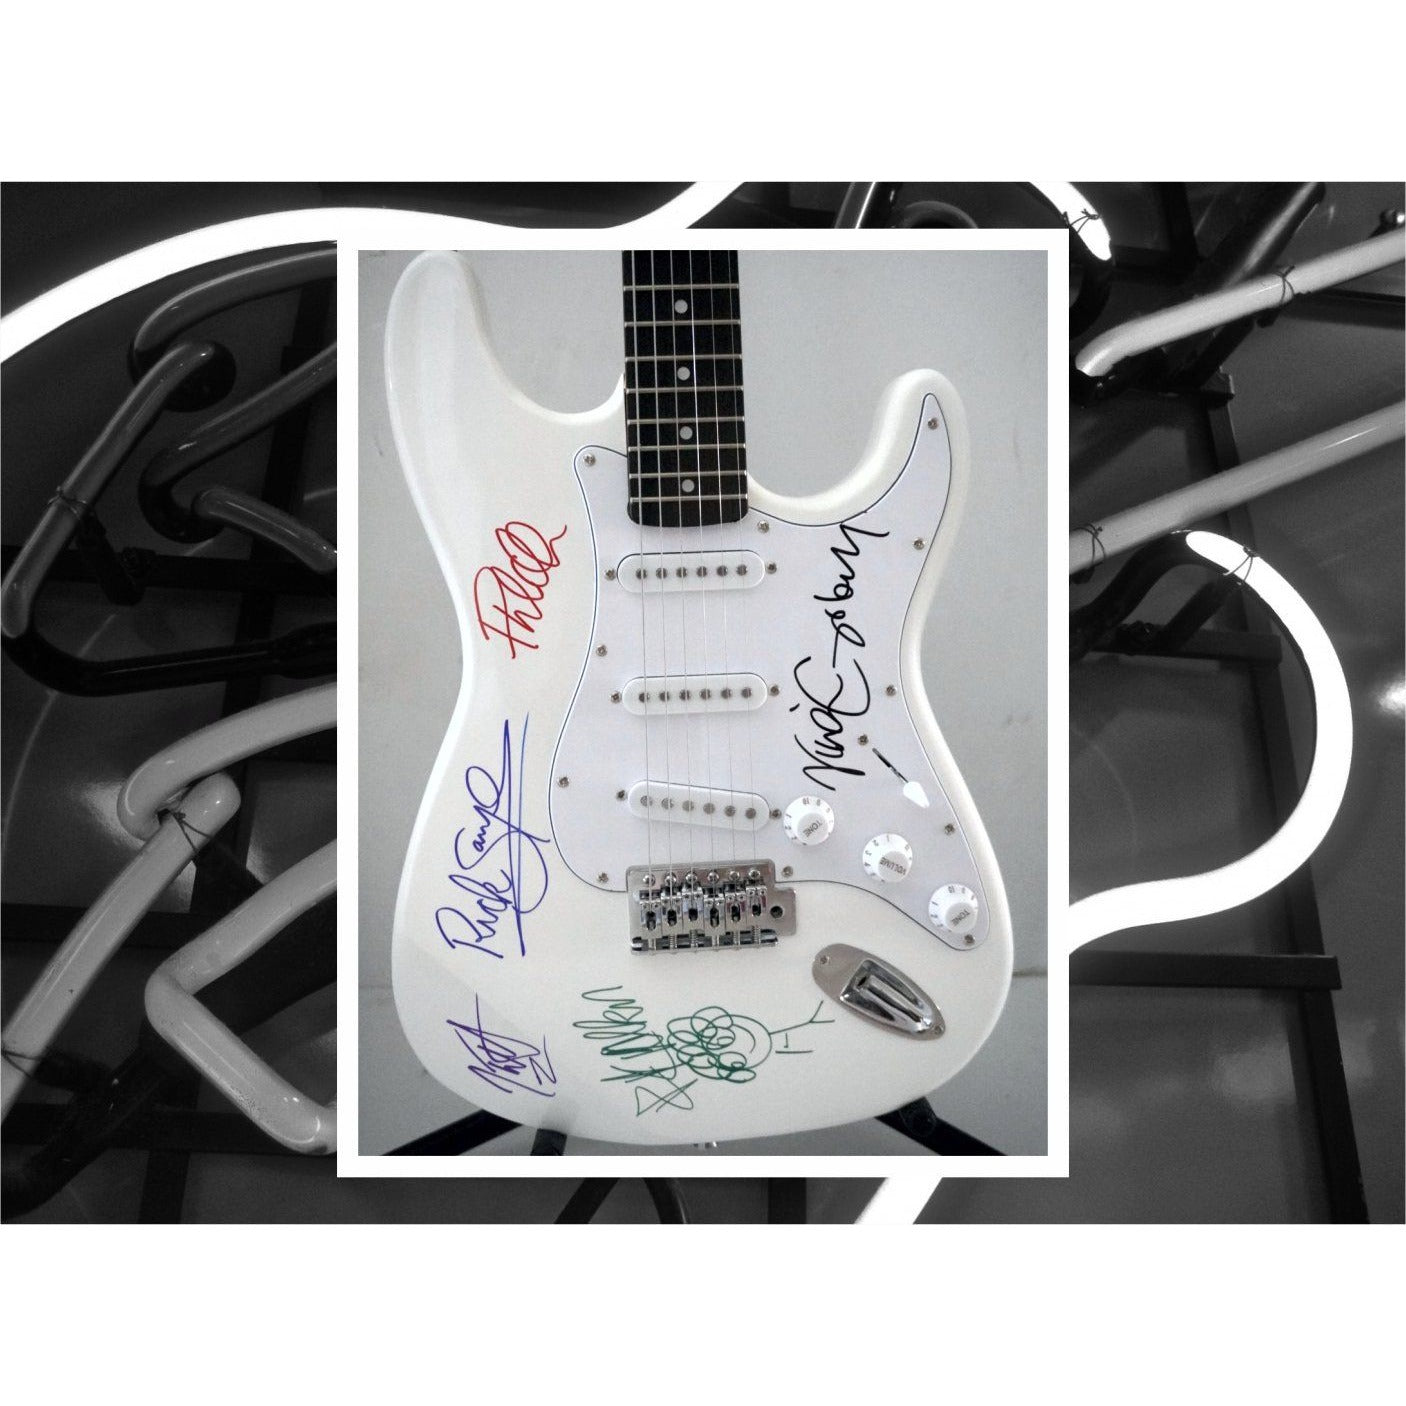 Def Leppard Joe Elliott Phil Collen Rick Allen Rick Savage Vivian Campbell signed electric guitar with proof